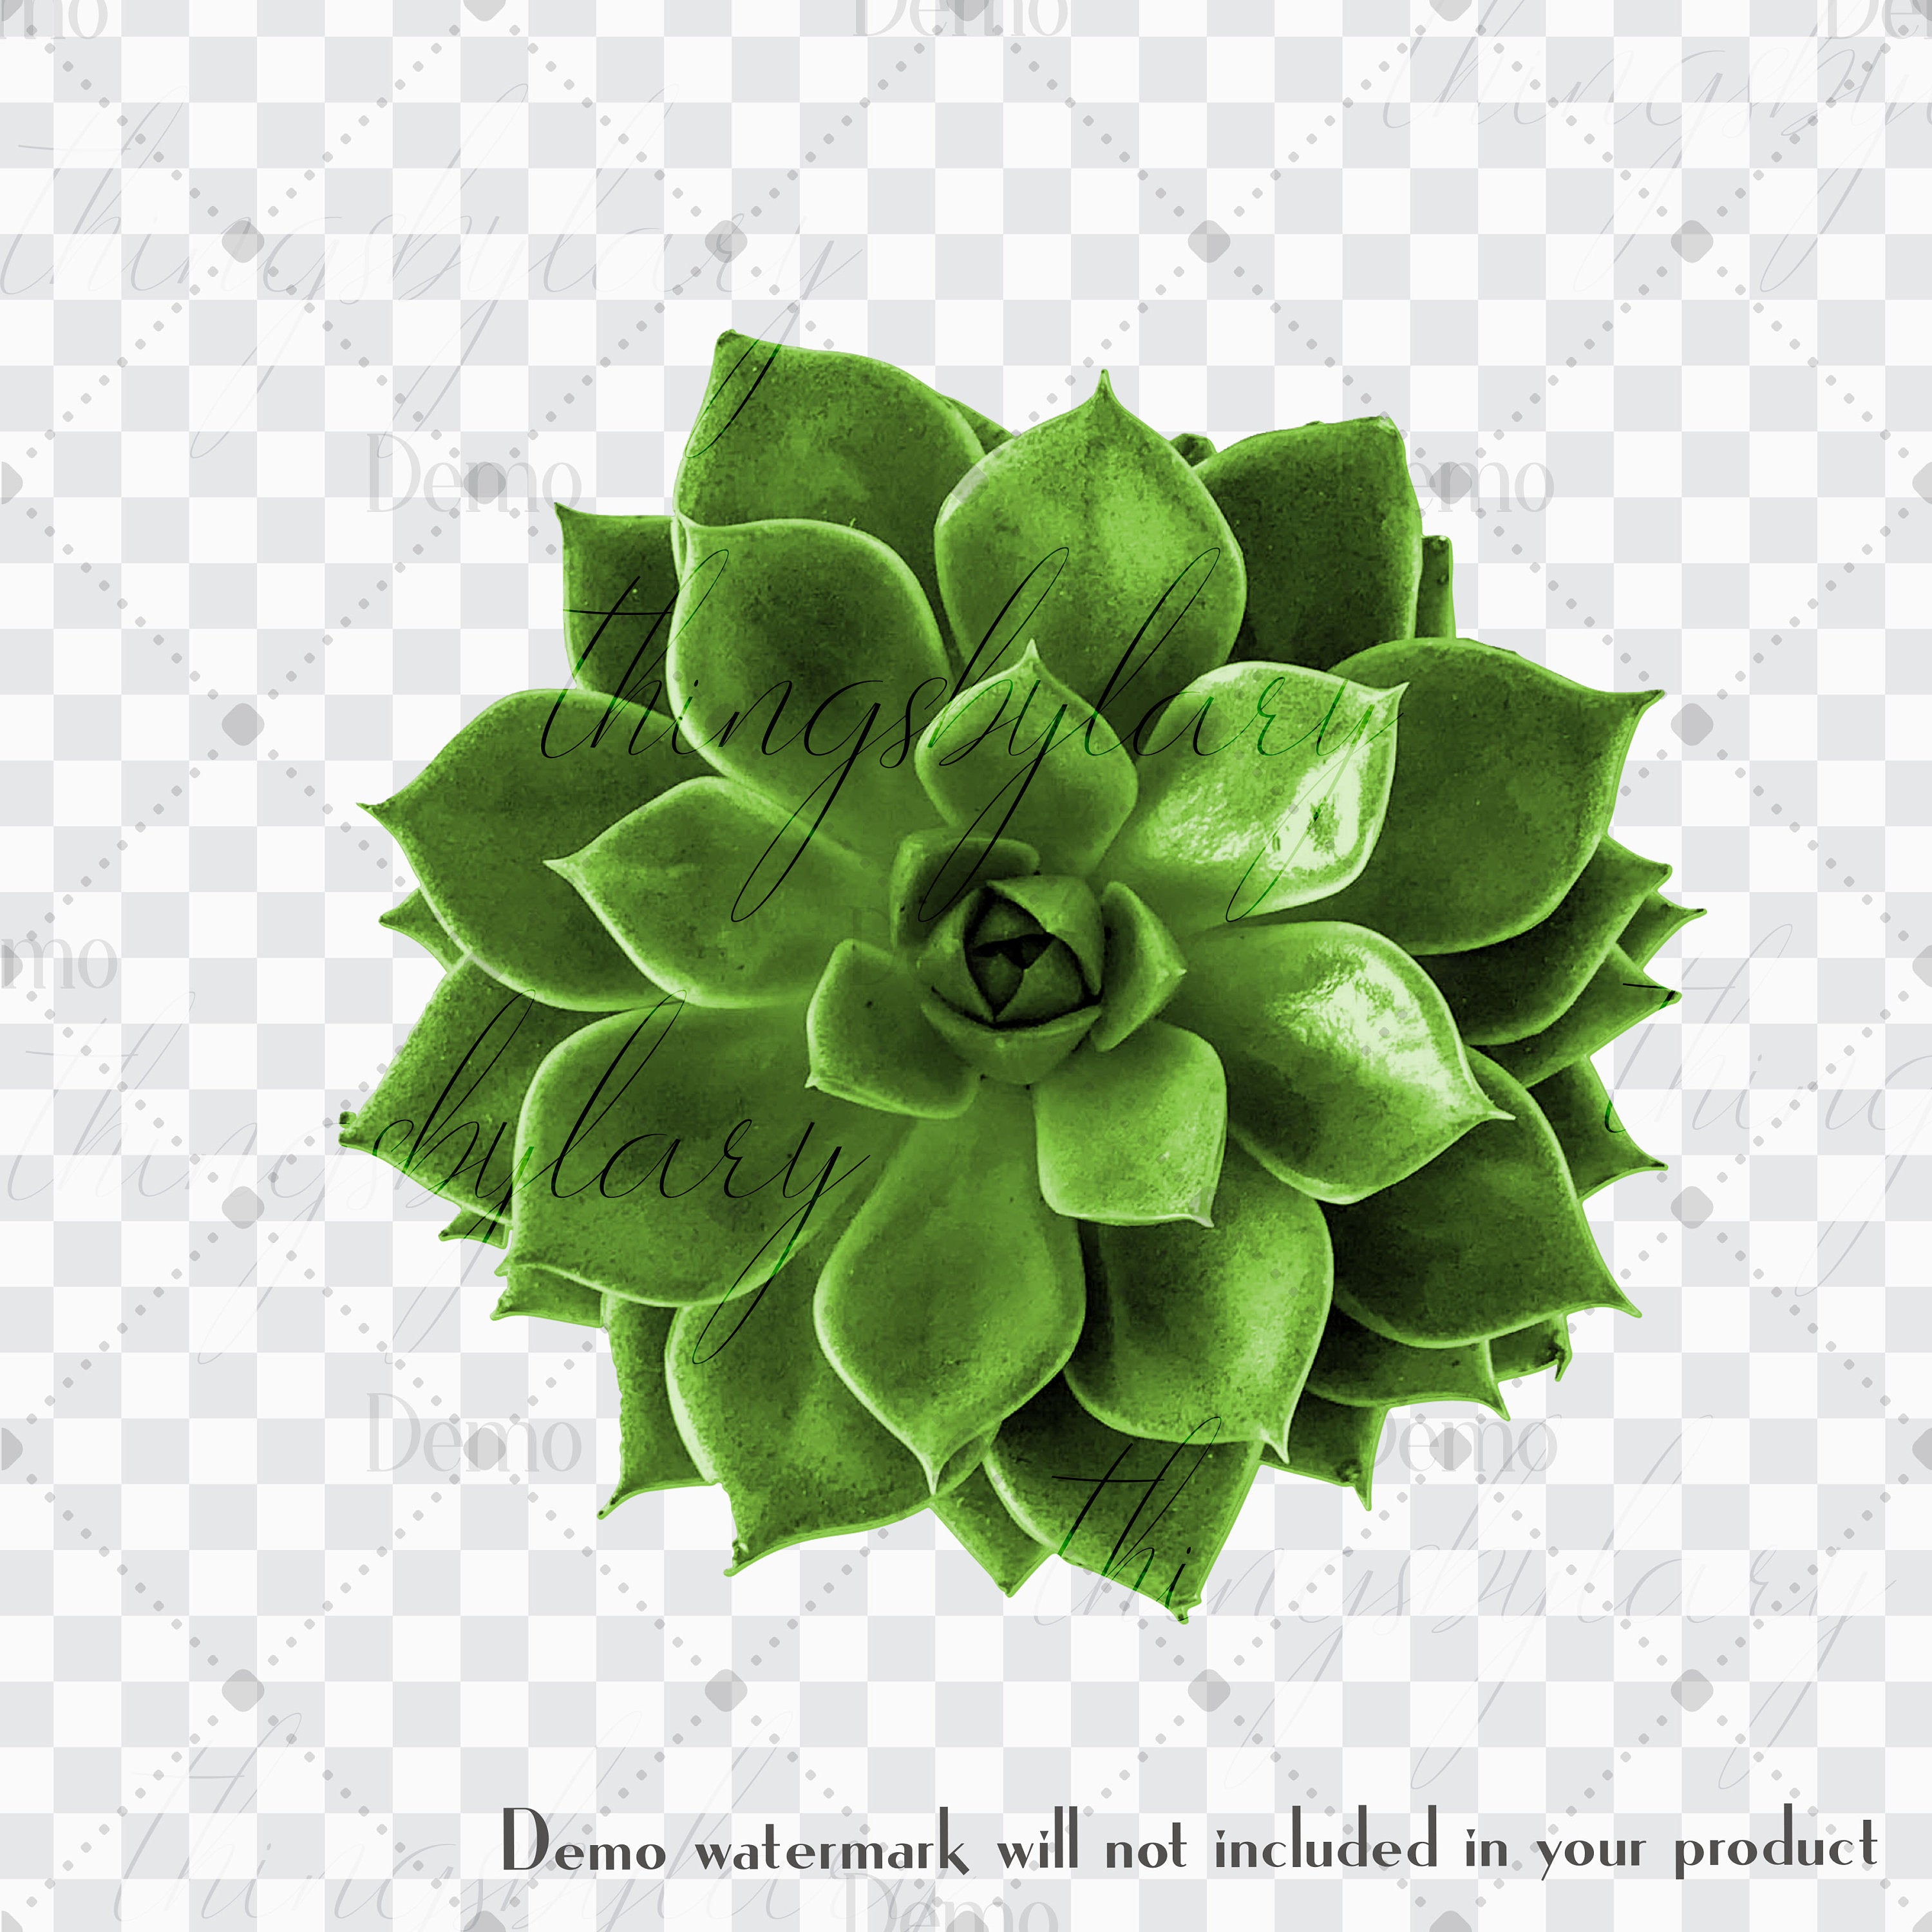 100 Real Vivid Succulent Cliparts 300 Dpi Instant Download Commercial Use, Scrapbook Botanical Kit Garden Clip Art, Succulent Plant